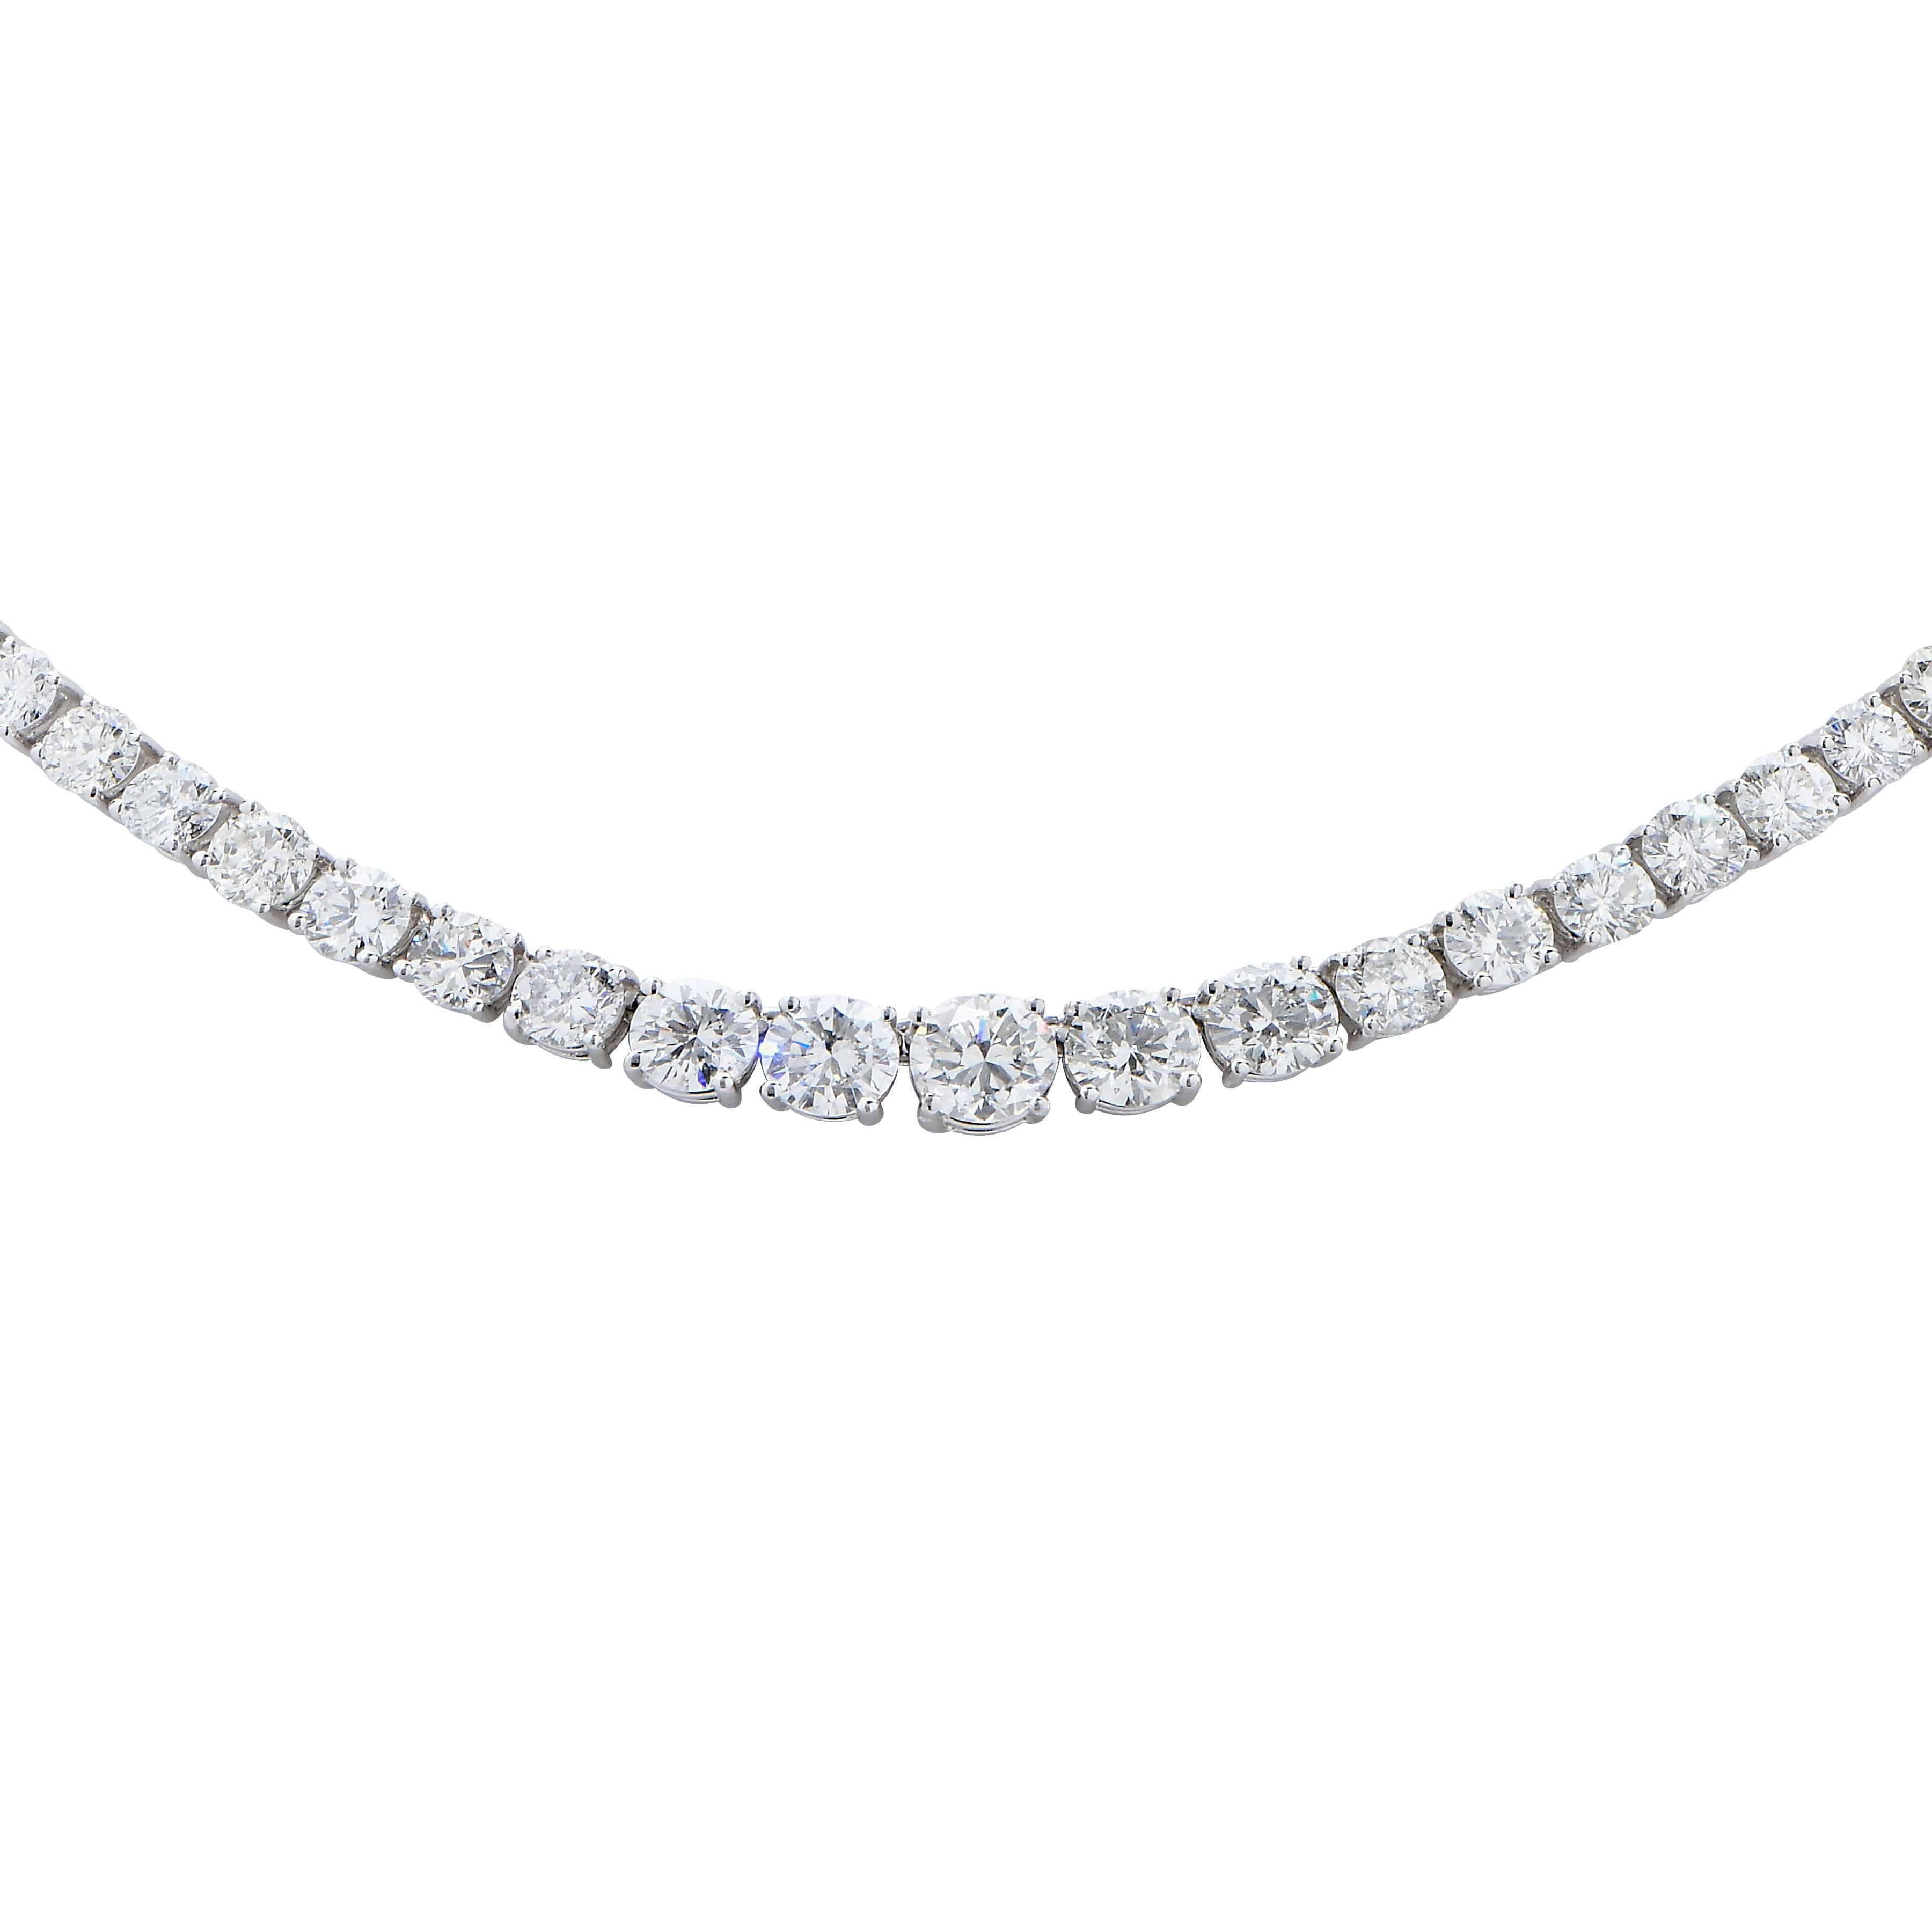 24k diamond necklace